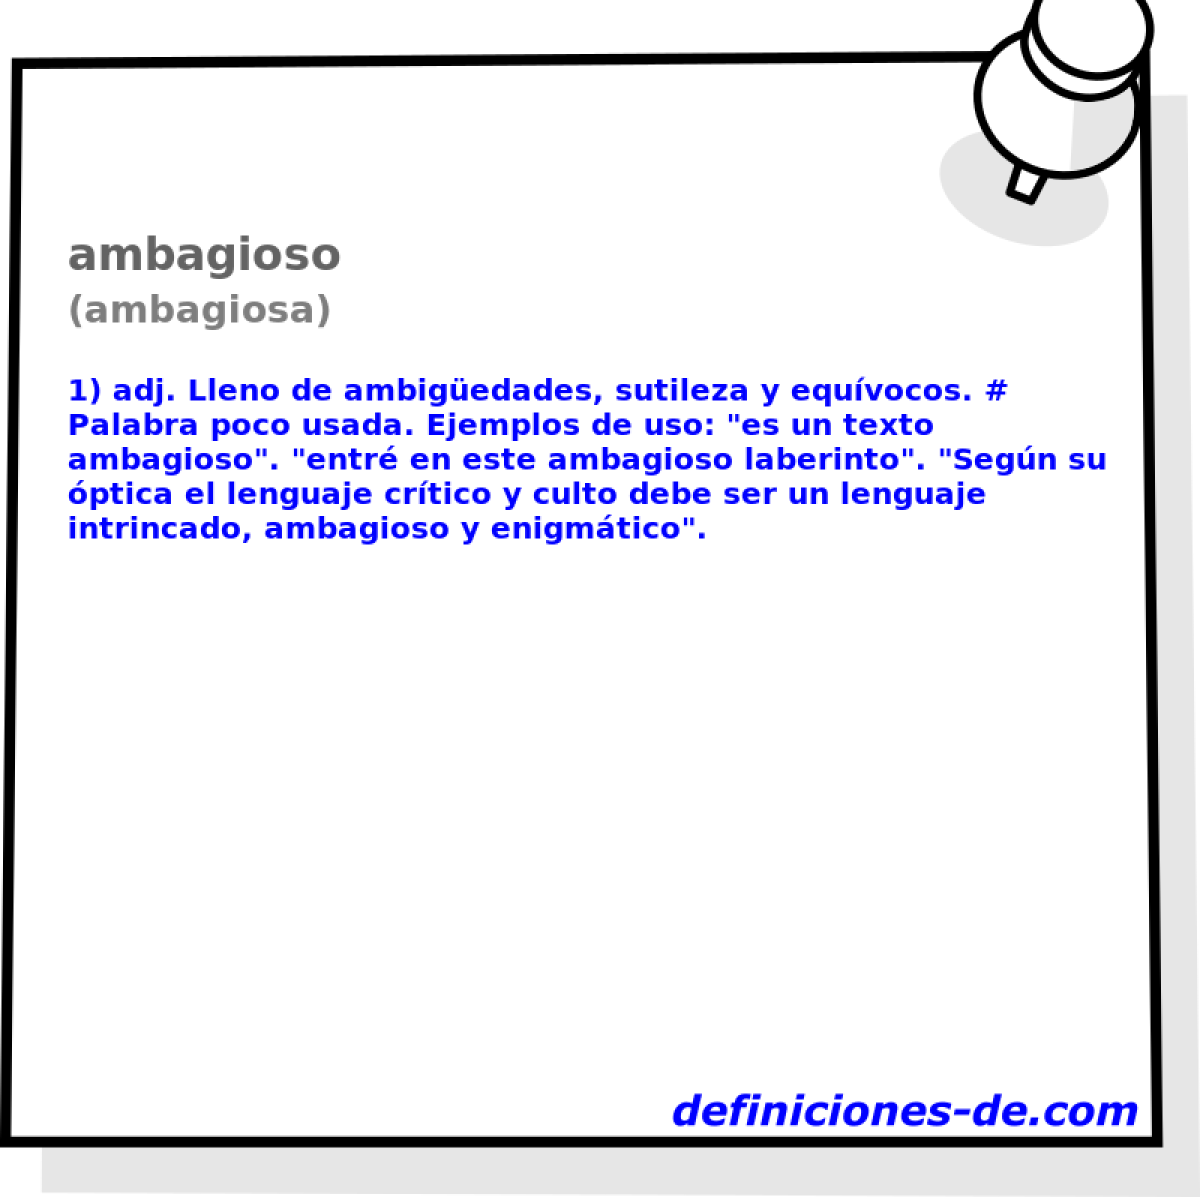 ambagioso (ambagiosa)